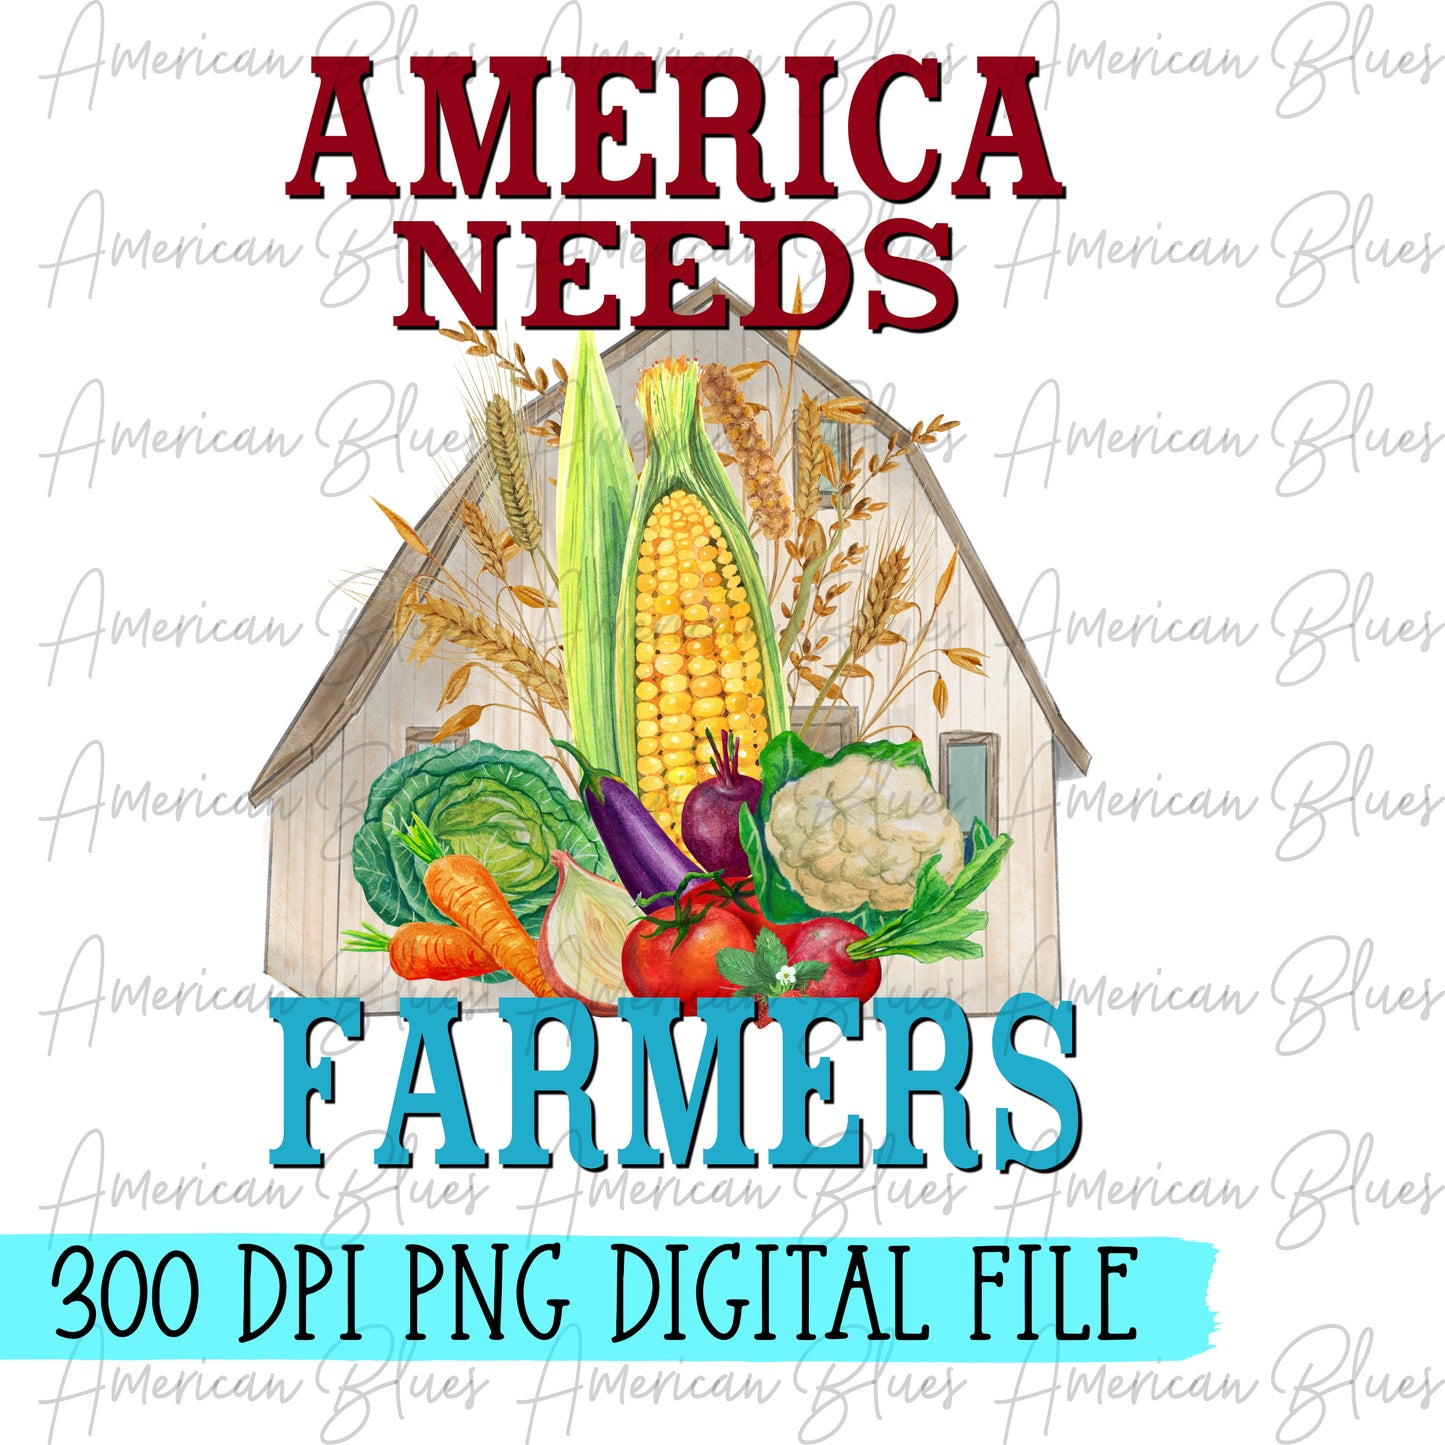 America needs farmers